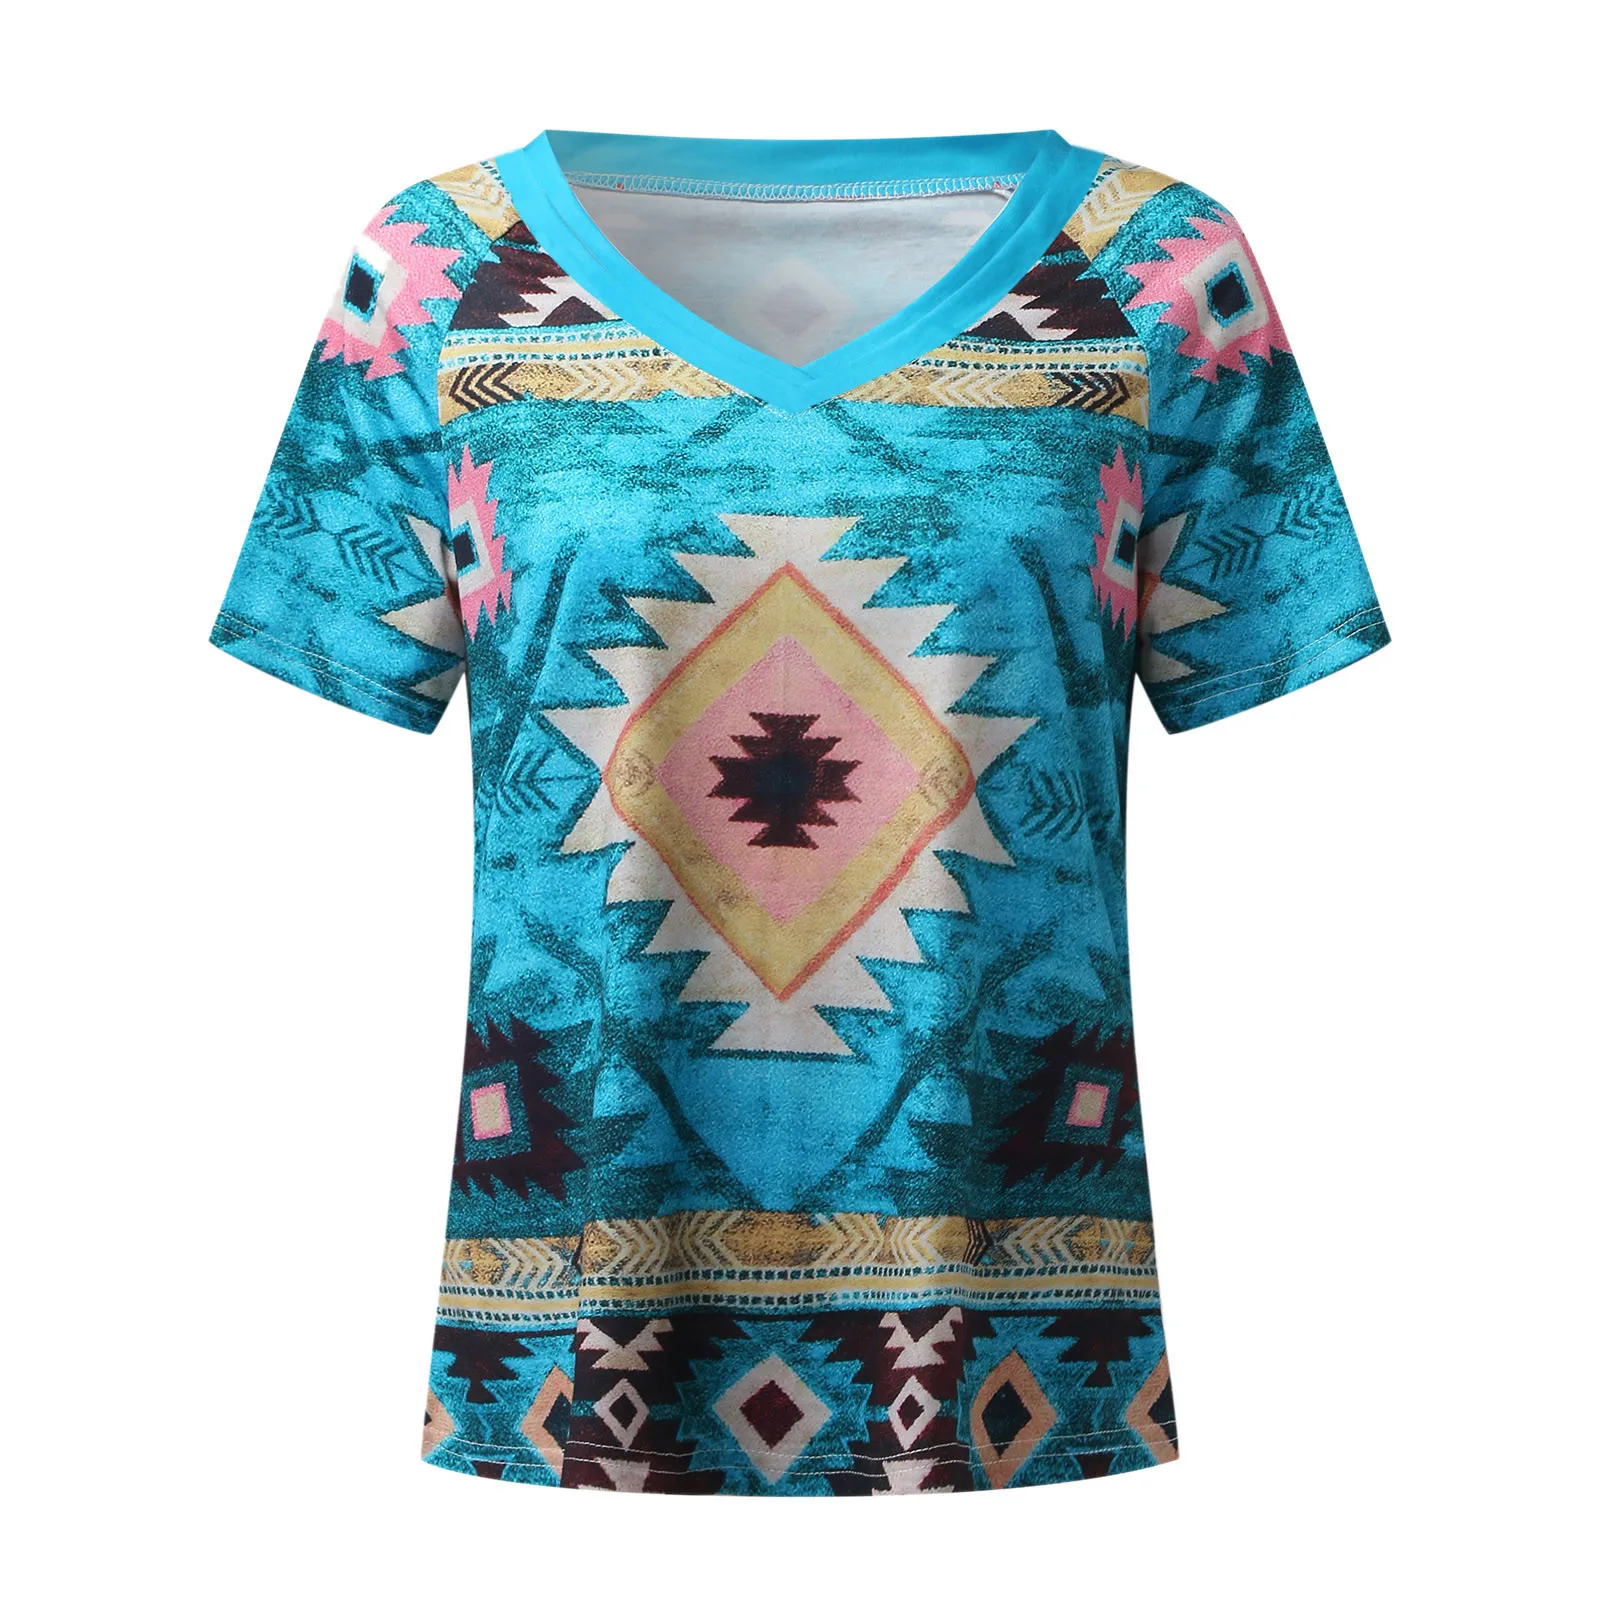 US$ 19.58 - Women Western Aztec Ethnic Print Summer T-Shirt Tops - www ...